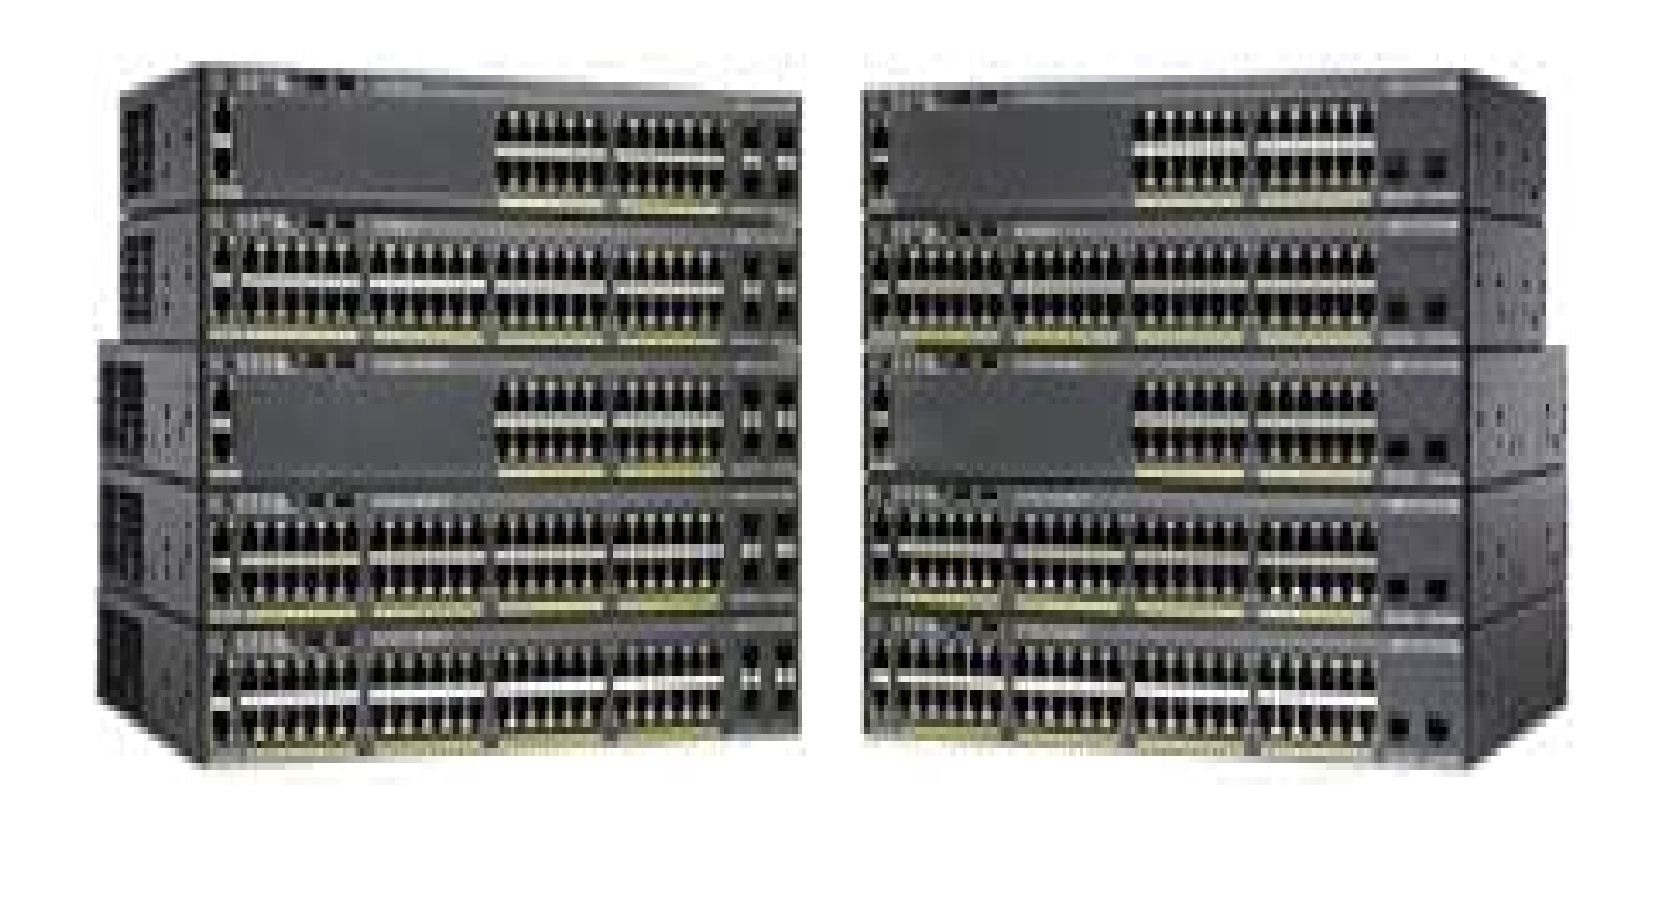 Thiết bị chuyển mạch Cisco \ Catalyst 2960X-24PS-L Catalyst 2960-X 24 GigE PoE 370W, 4 x 1G SFP, LAN Base